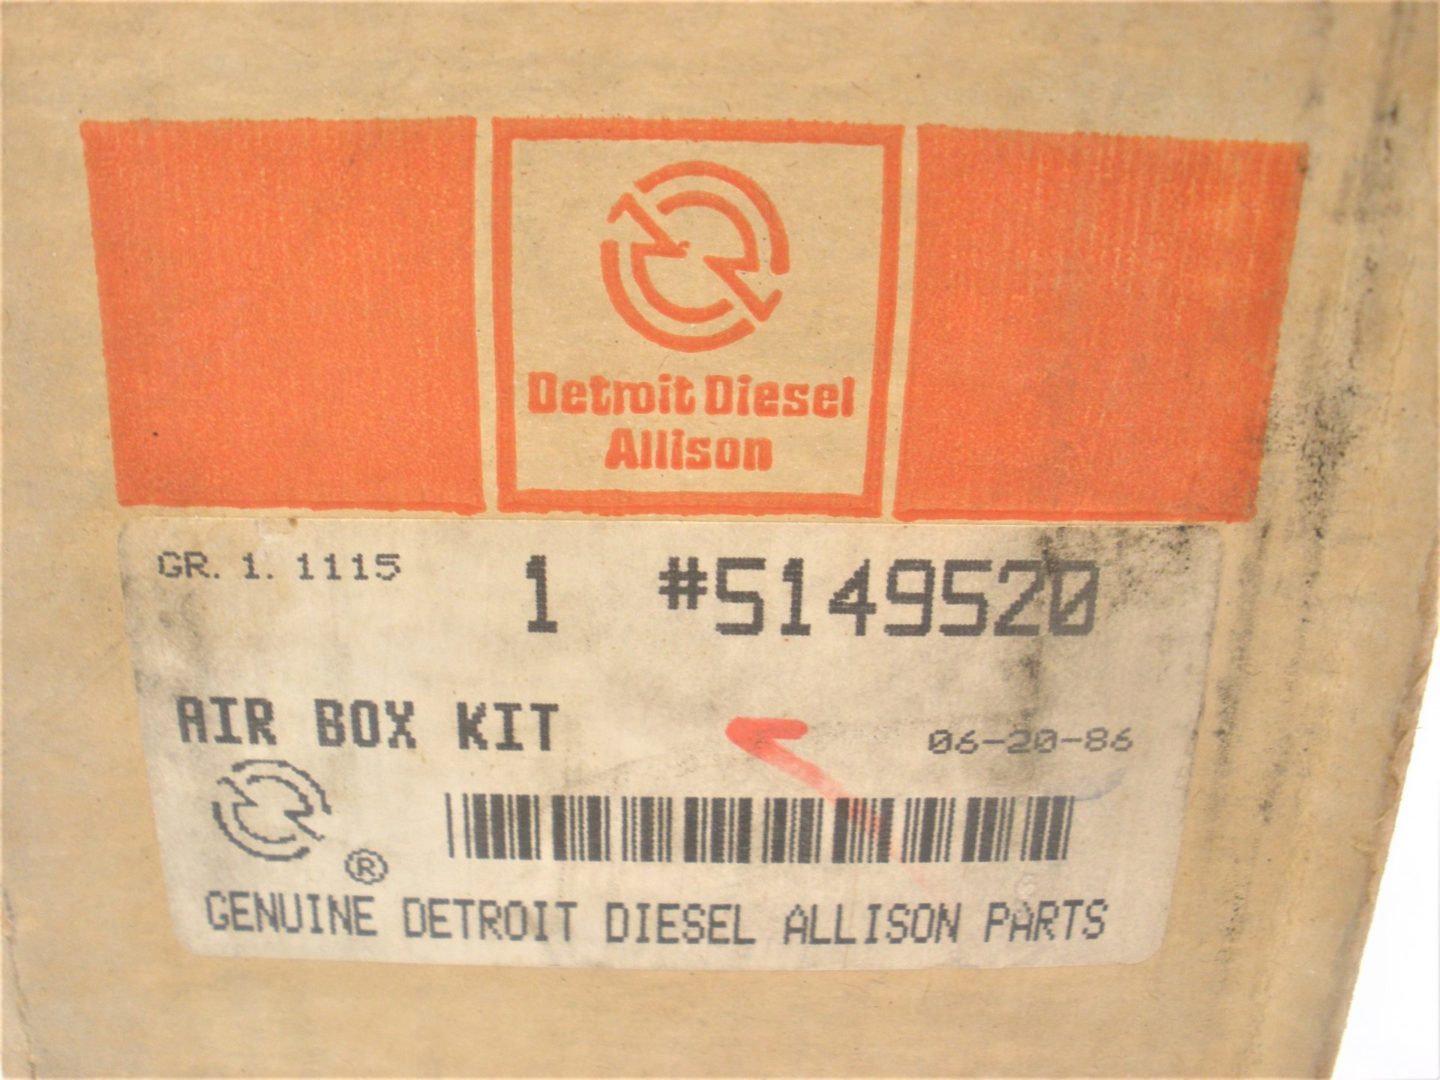 Airbox Detroit Diesel Air Box Kit Drain Parts Kit 5149520 Detroit Diesel